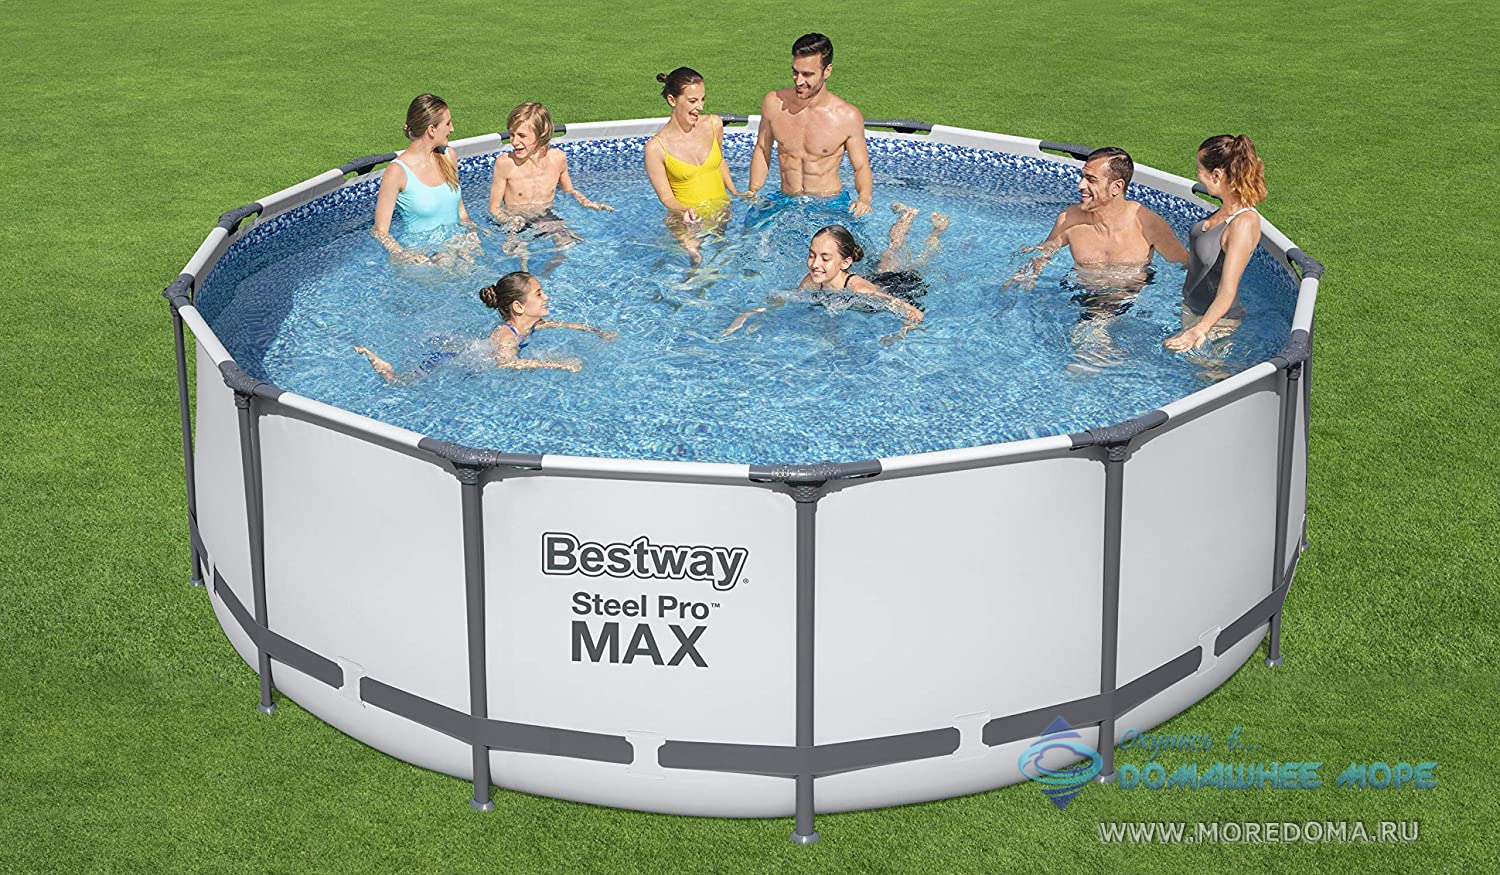 5612X Каркасный бассейн Bestway Steel Pro Max (круг) 4.27 х 1.22 м ; артикул 5612X диаметр 4.27 высота 1.22  